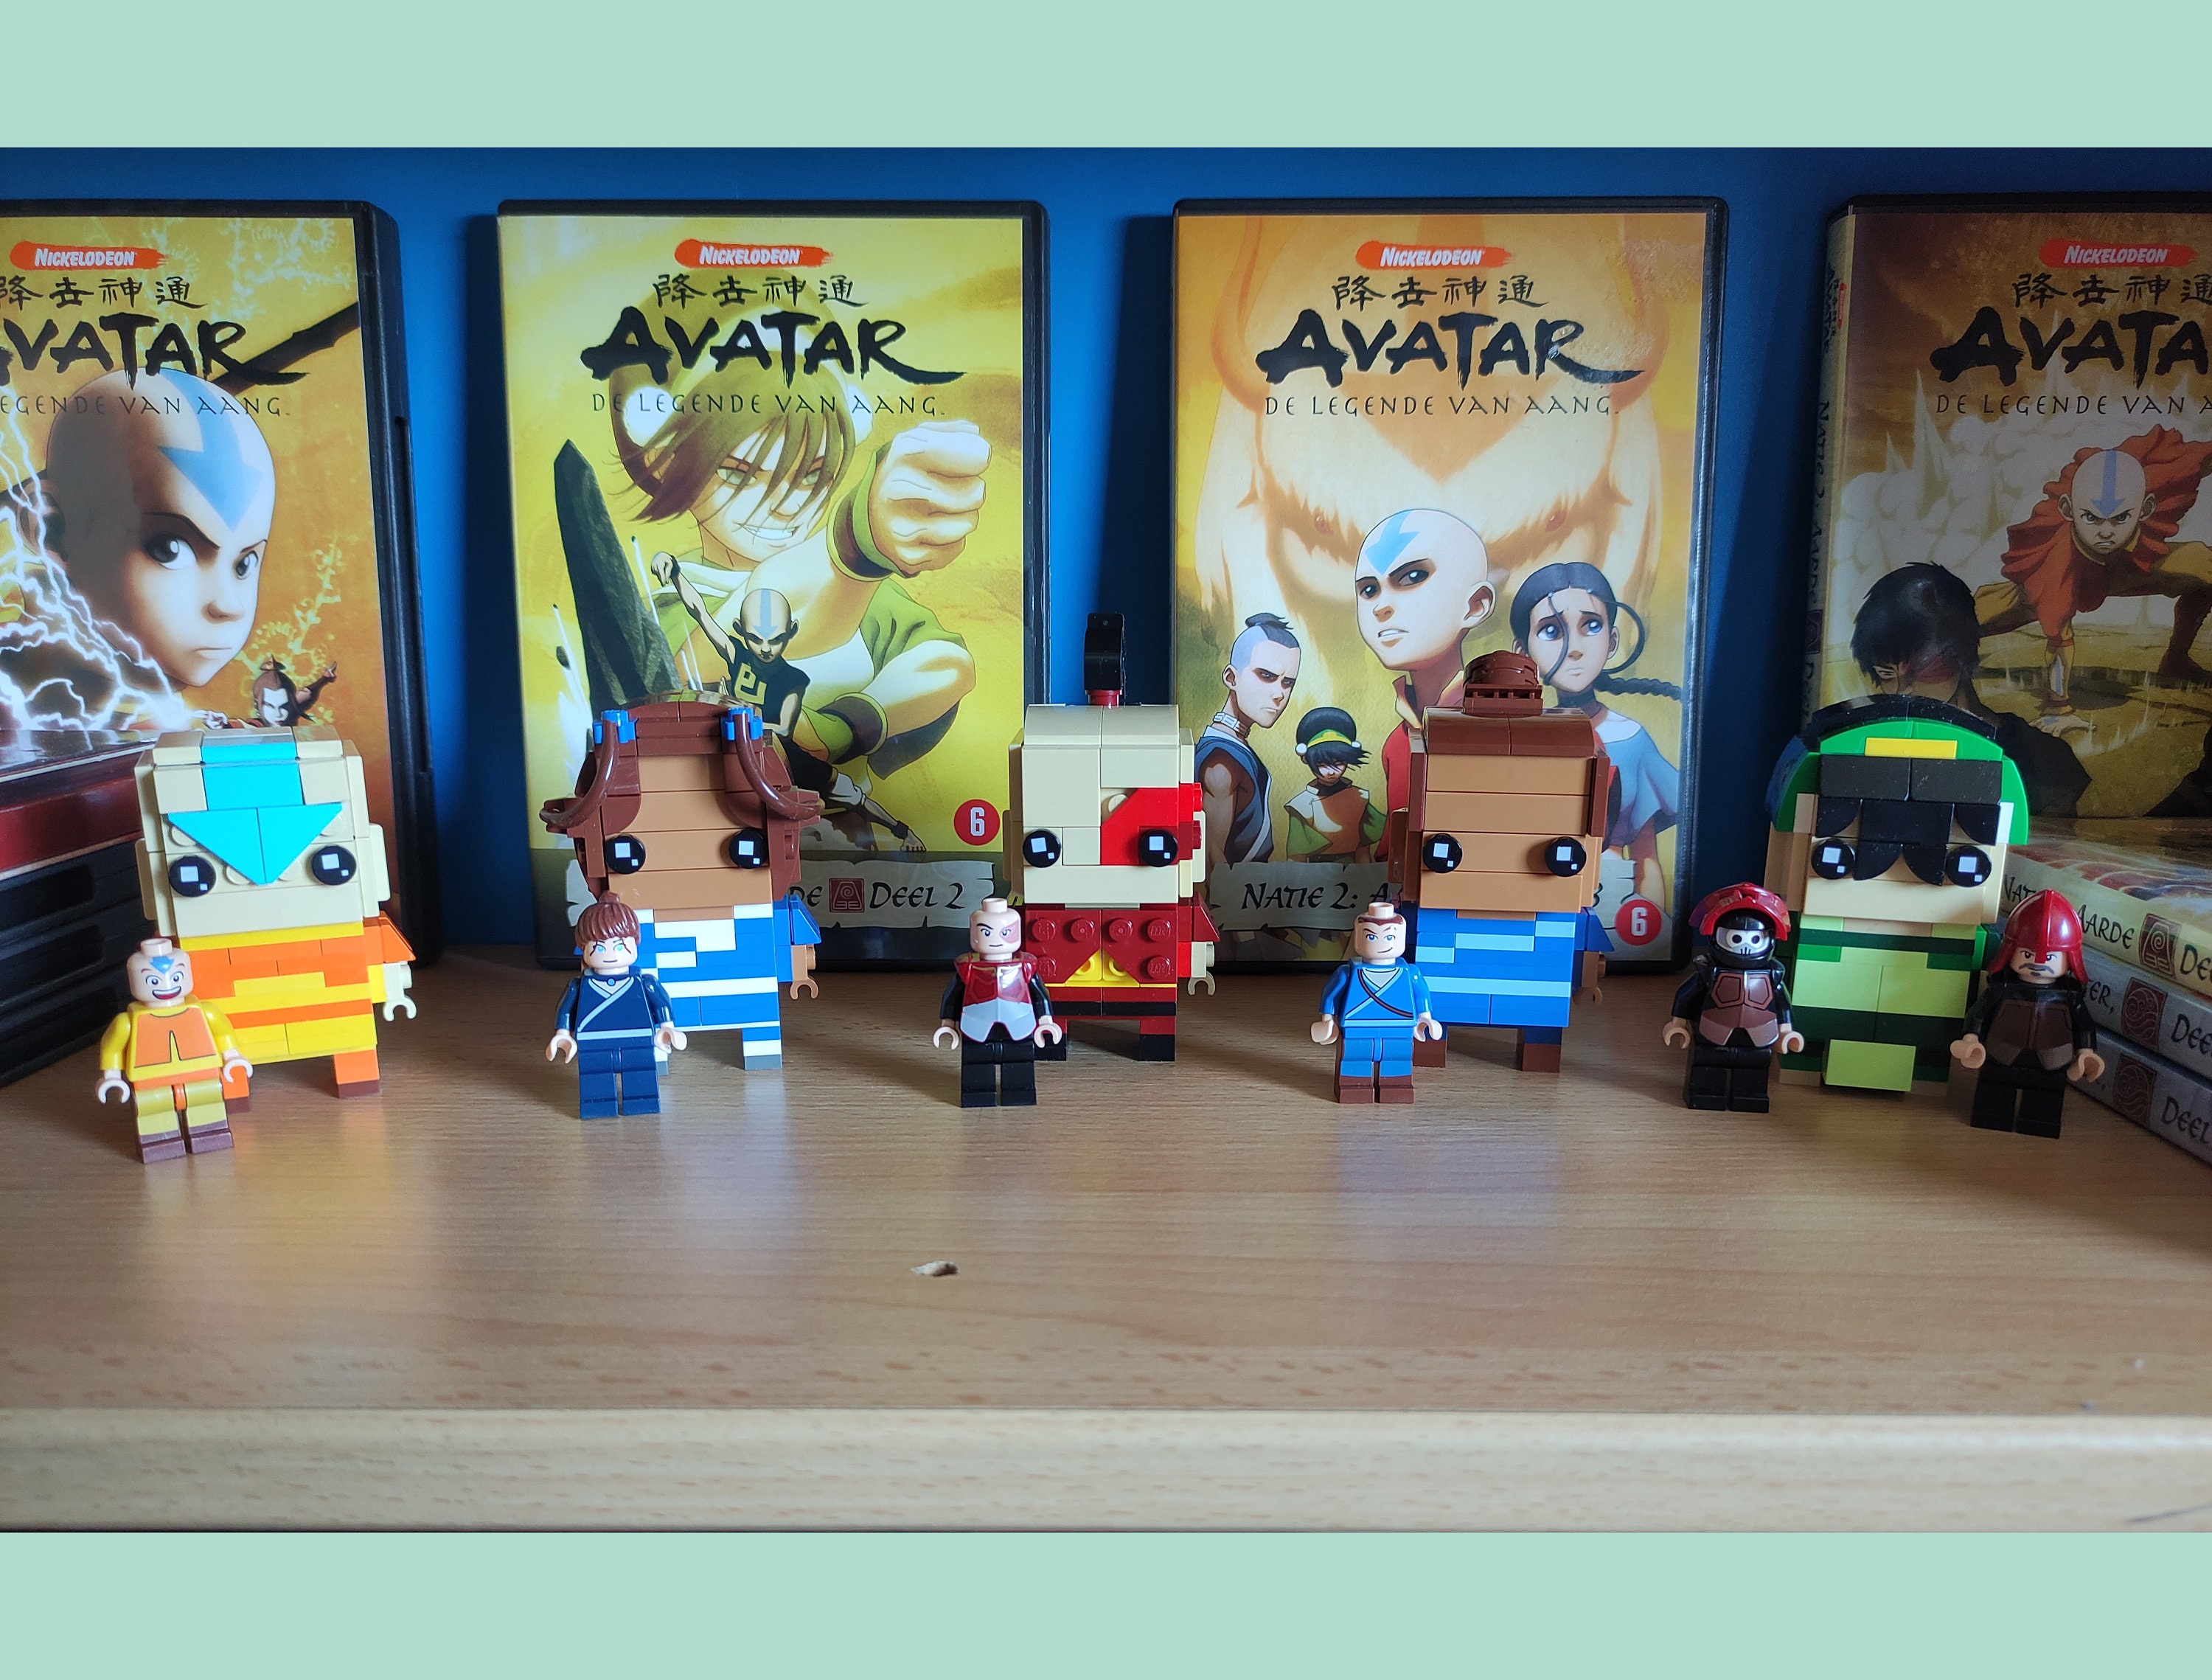 YIP YIP Team Avatar! My Lego Avatar: The Last Airbender project is